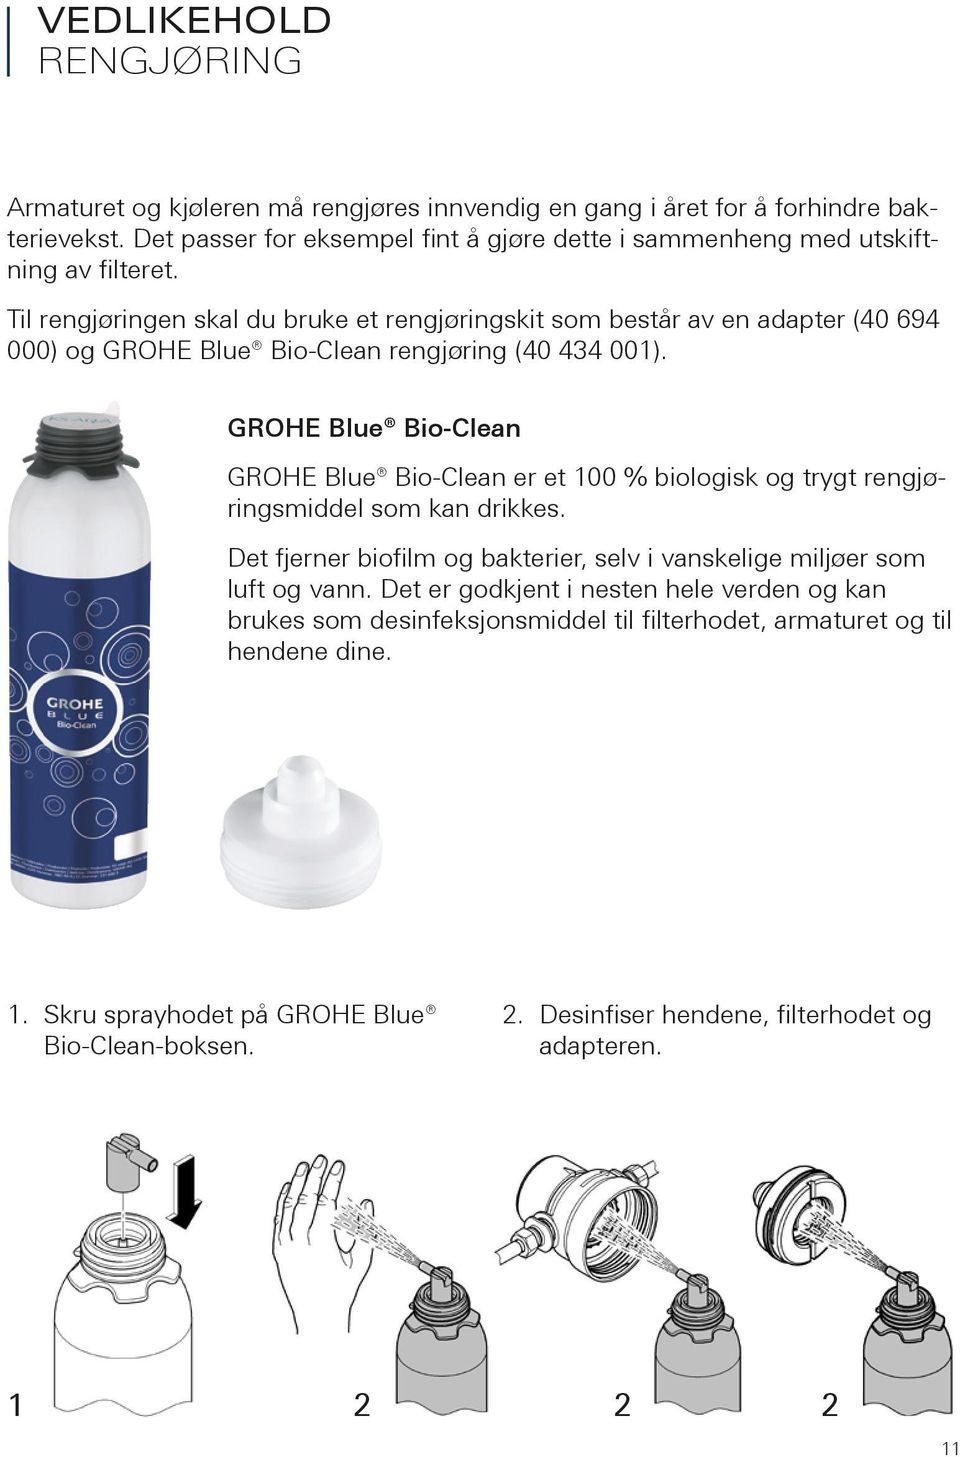 GROHE Blue Bio-Clean GROHE Blue Bio-Clean er et 00 % biologisk og trygt rengjøringsmiddel som kan drikkes. Det fjerner biofilm og bakterier, selv i vanskelige miljøer som luft og vann.